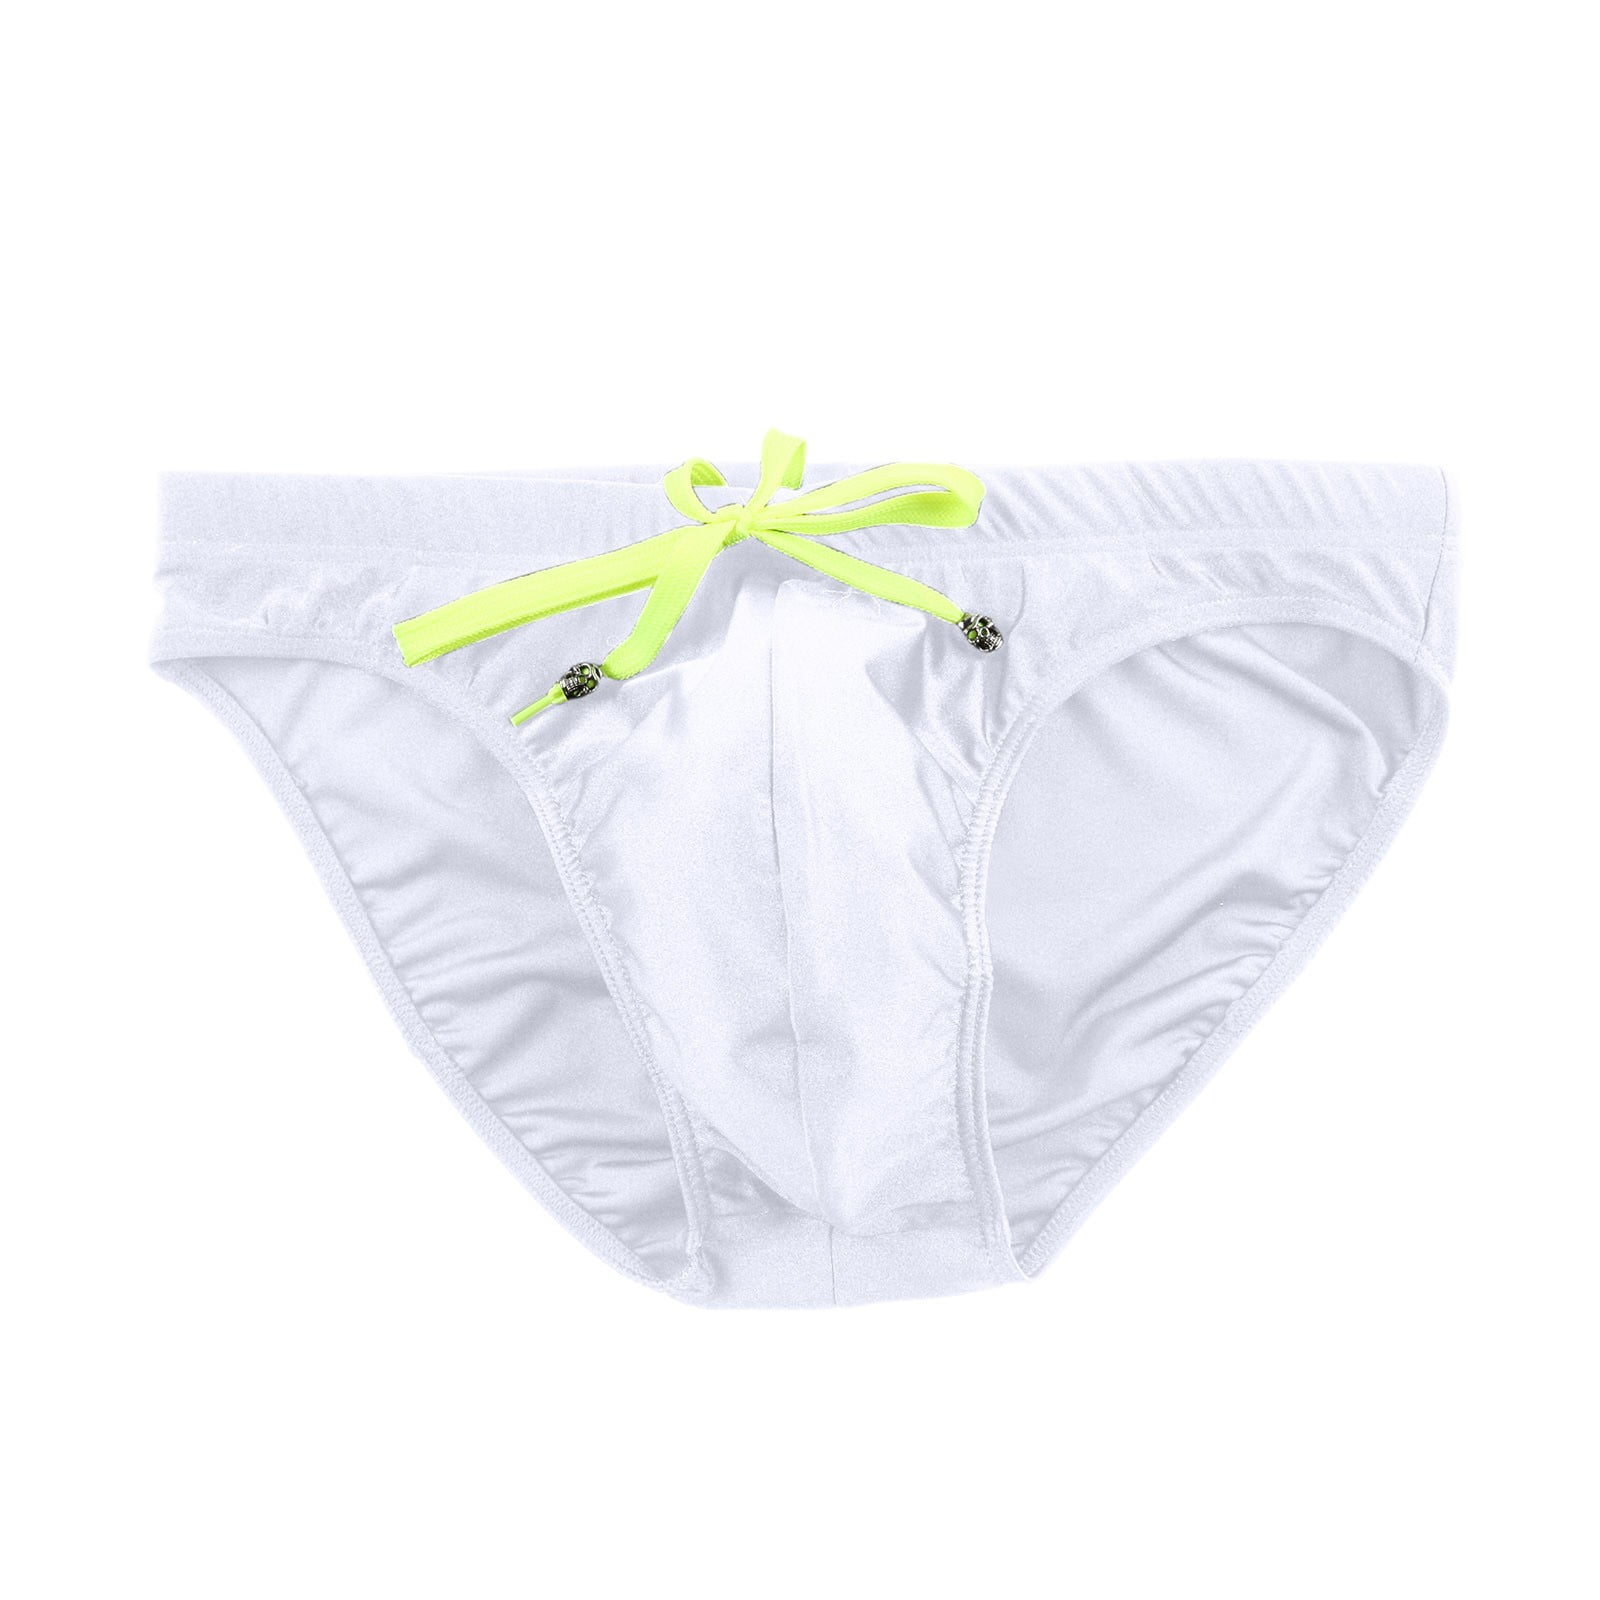 kpoplk Men's Padded Enhancing Underwear Rounderbum Brief White,XL